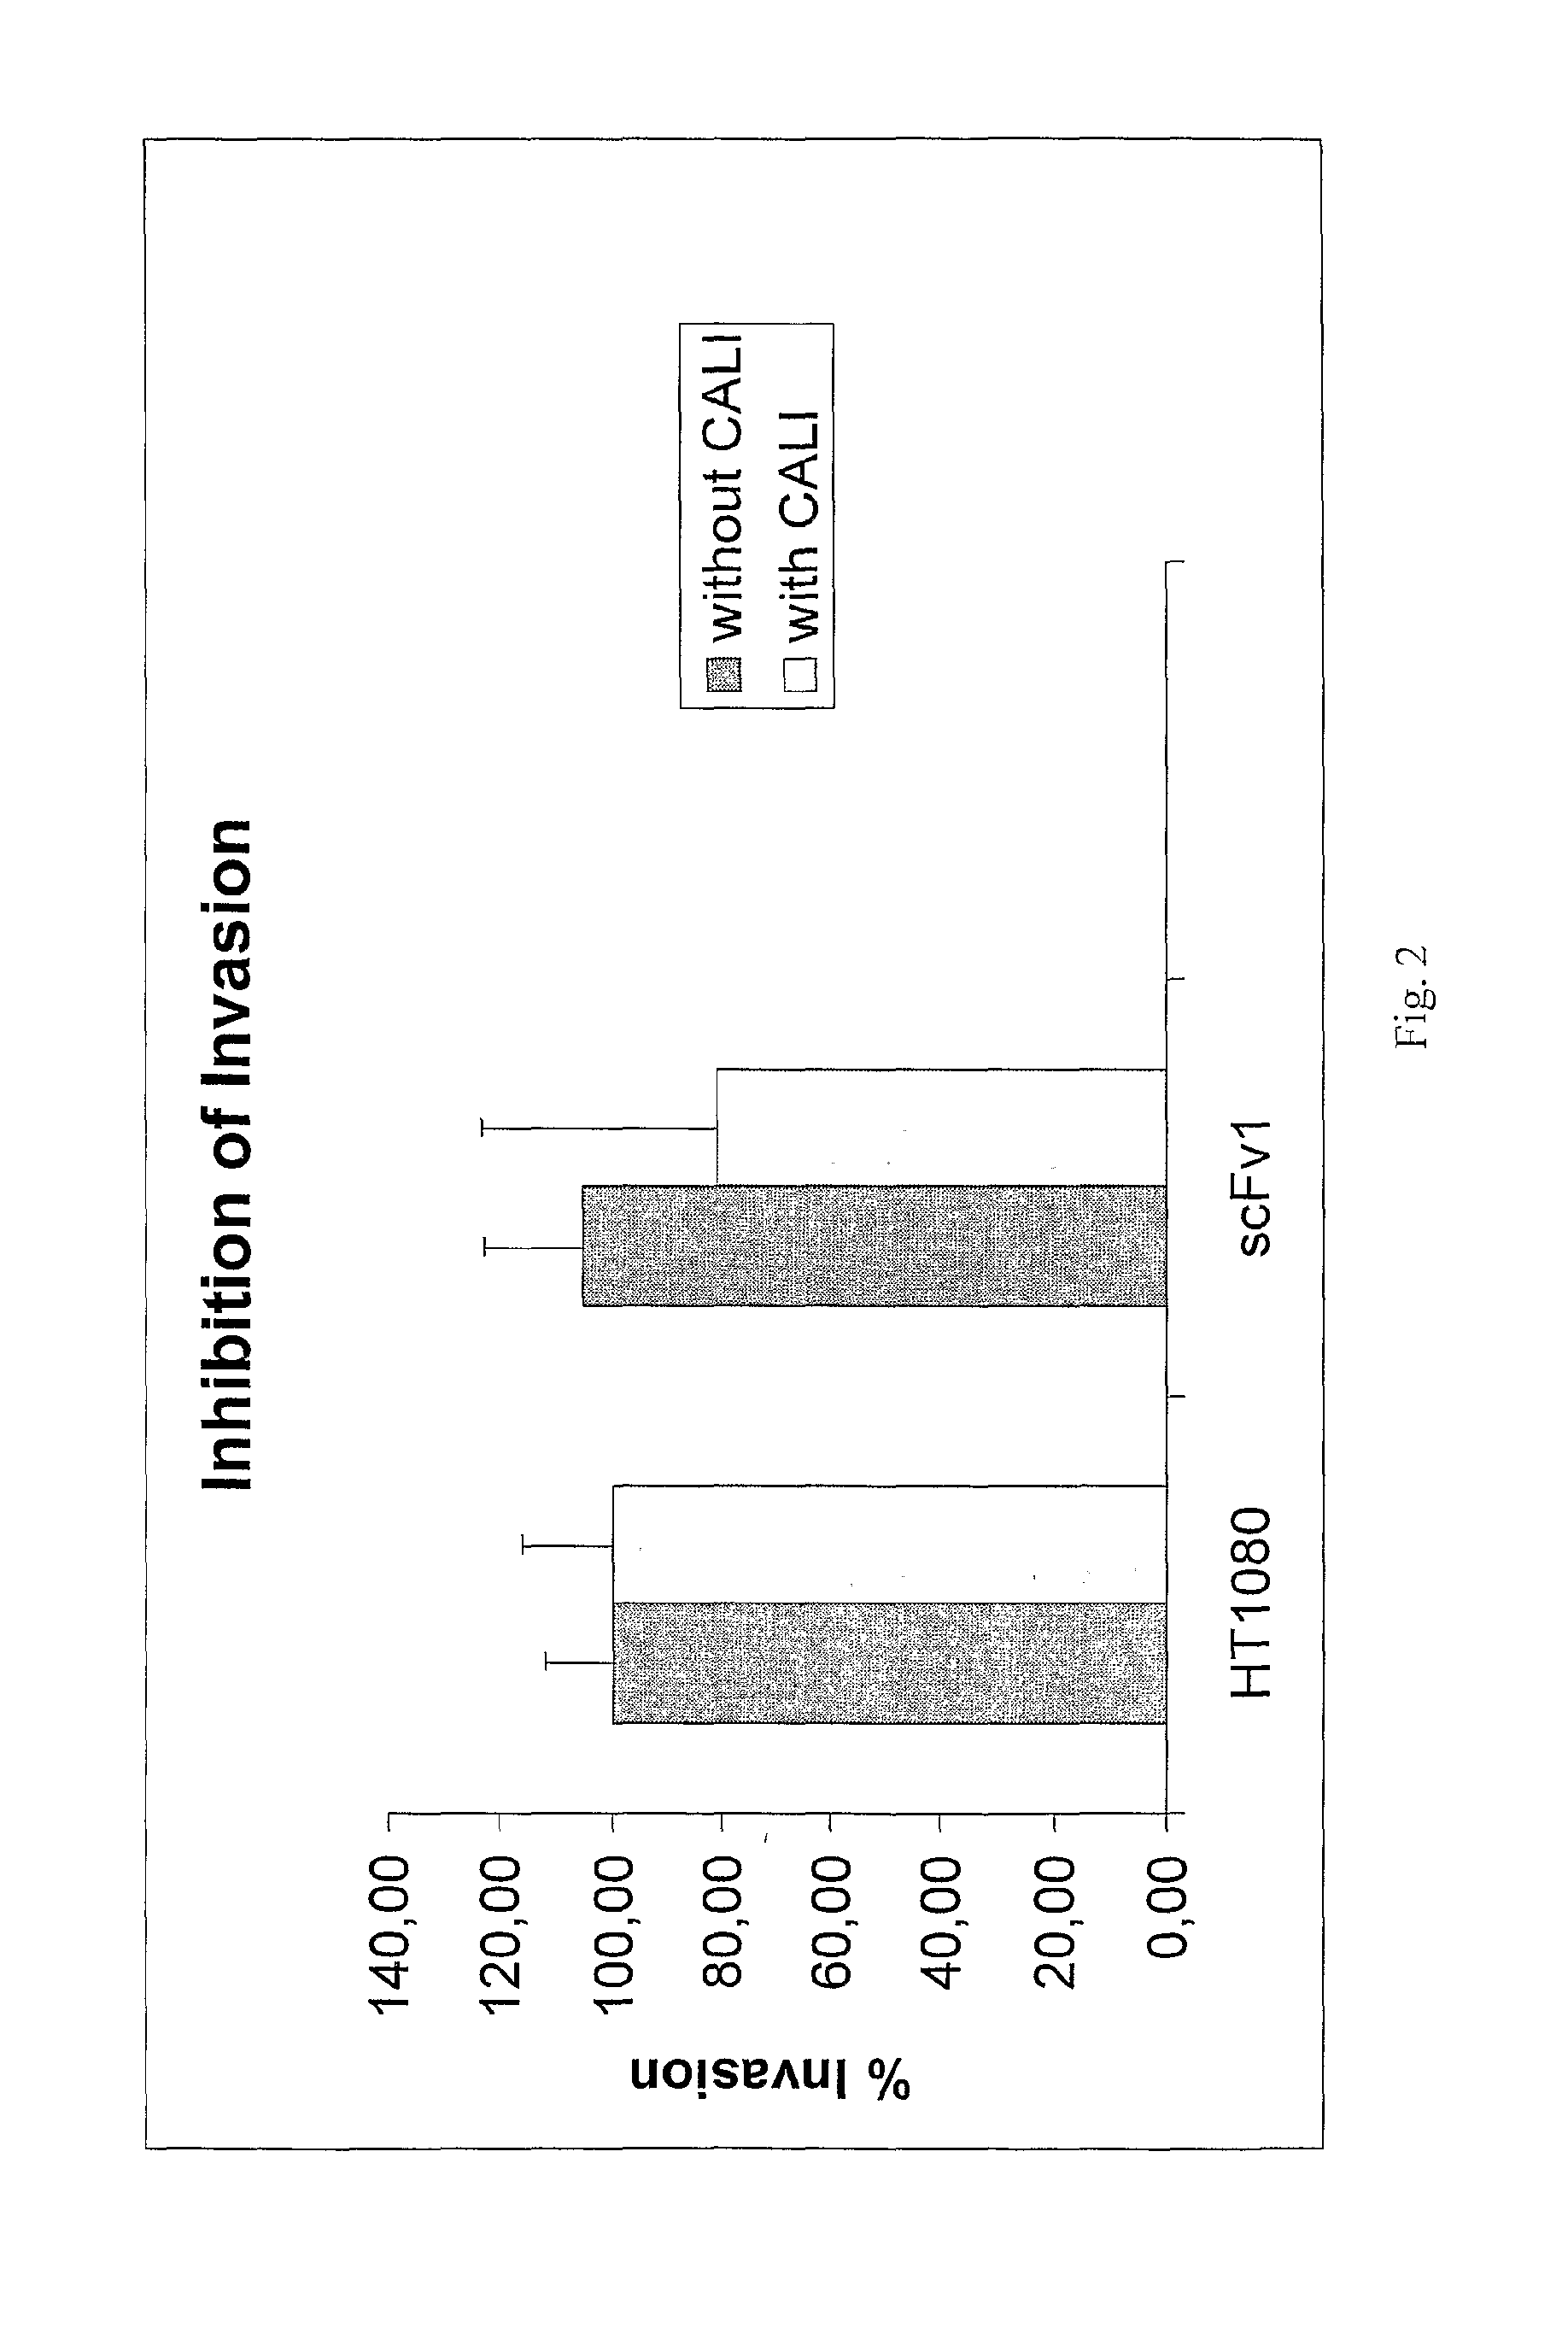 Neuropilin-1 inhibitors